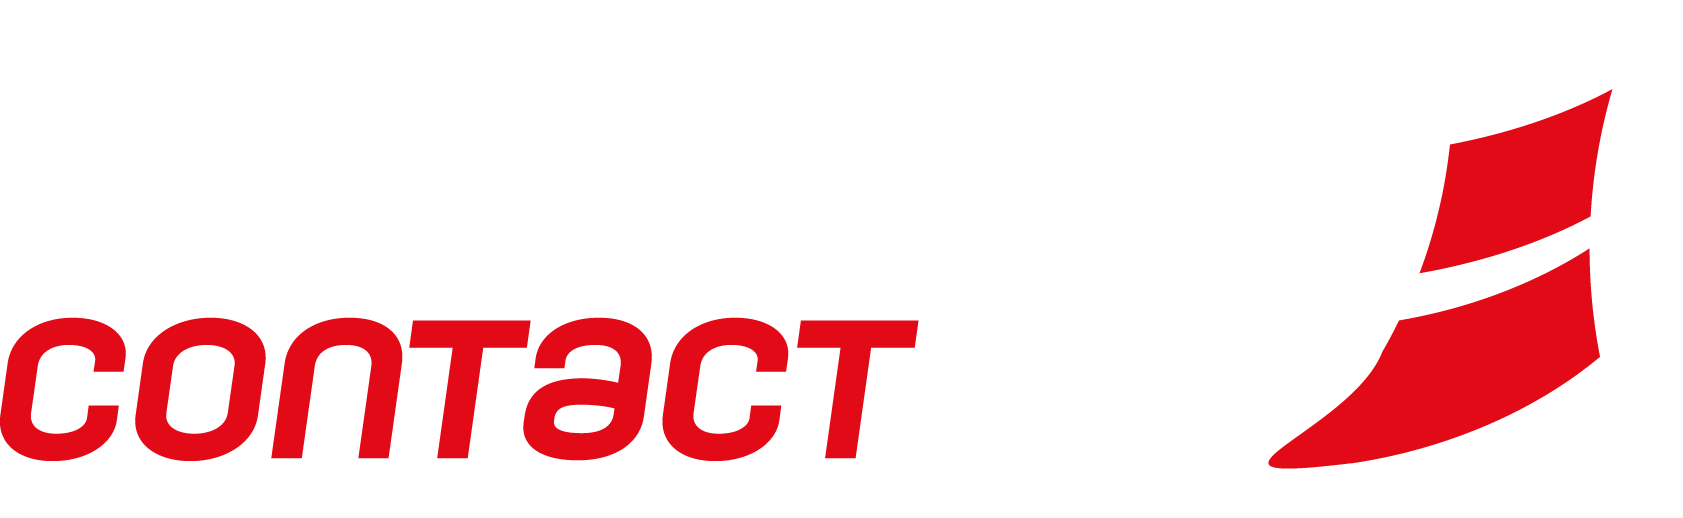 UA UTILITY SOFTBALL PANTS WMN'S - Sports Contact